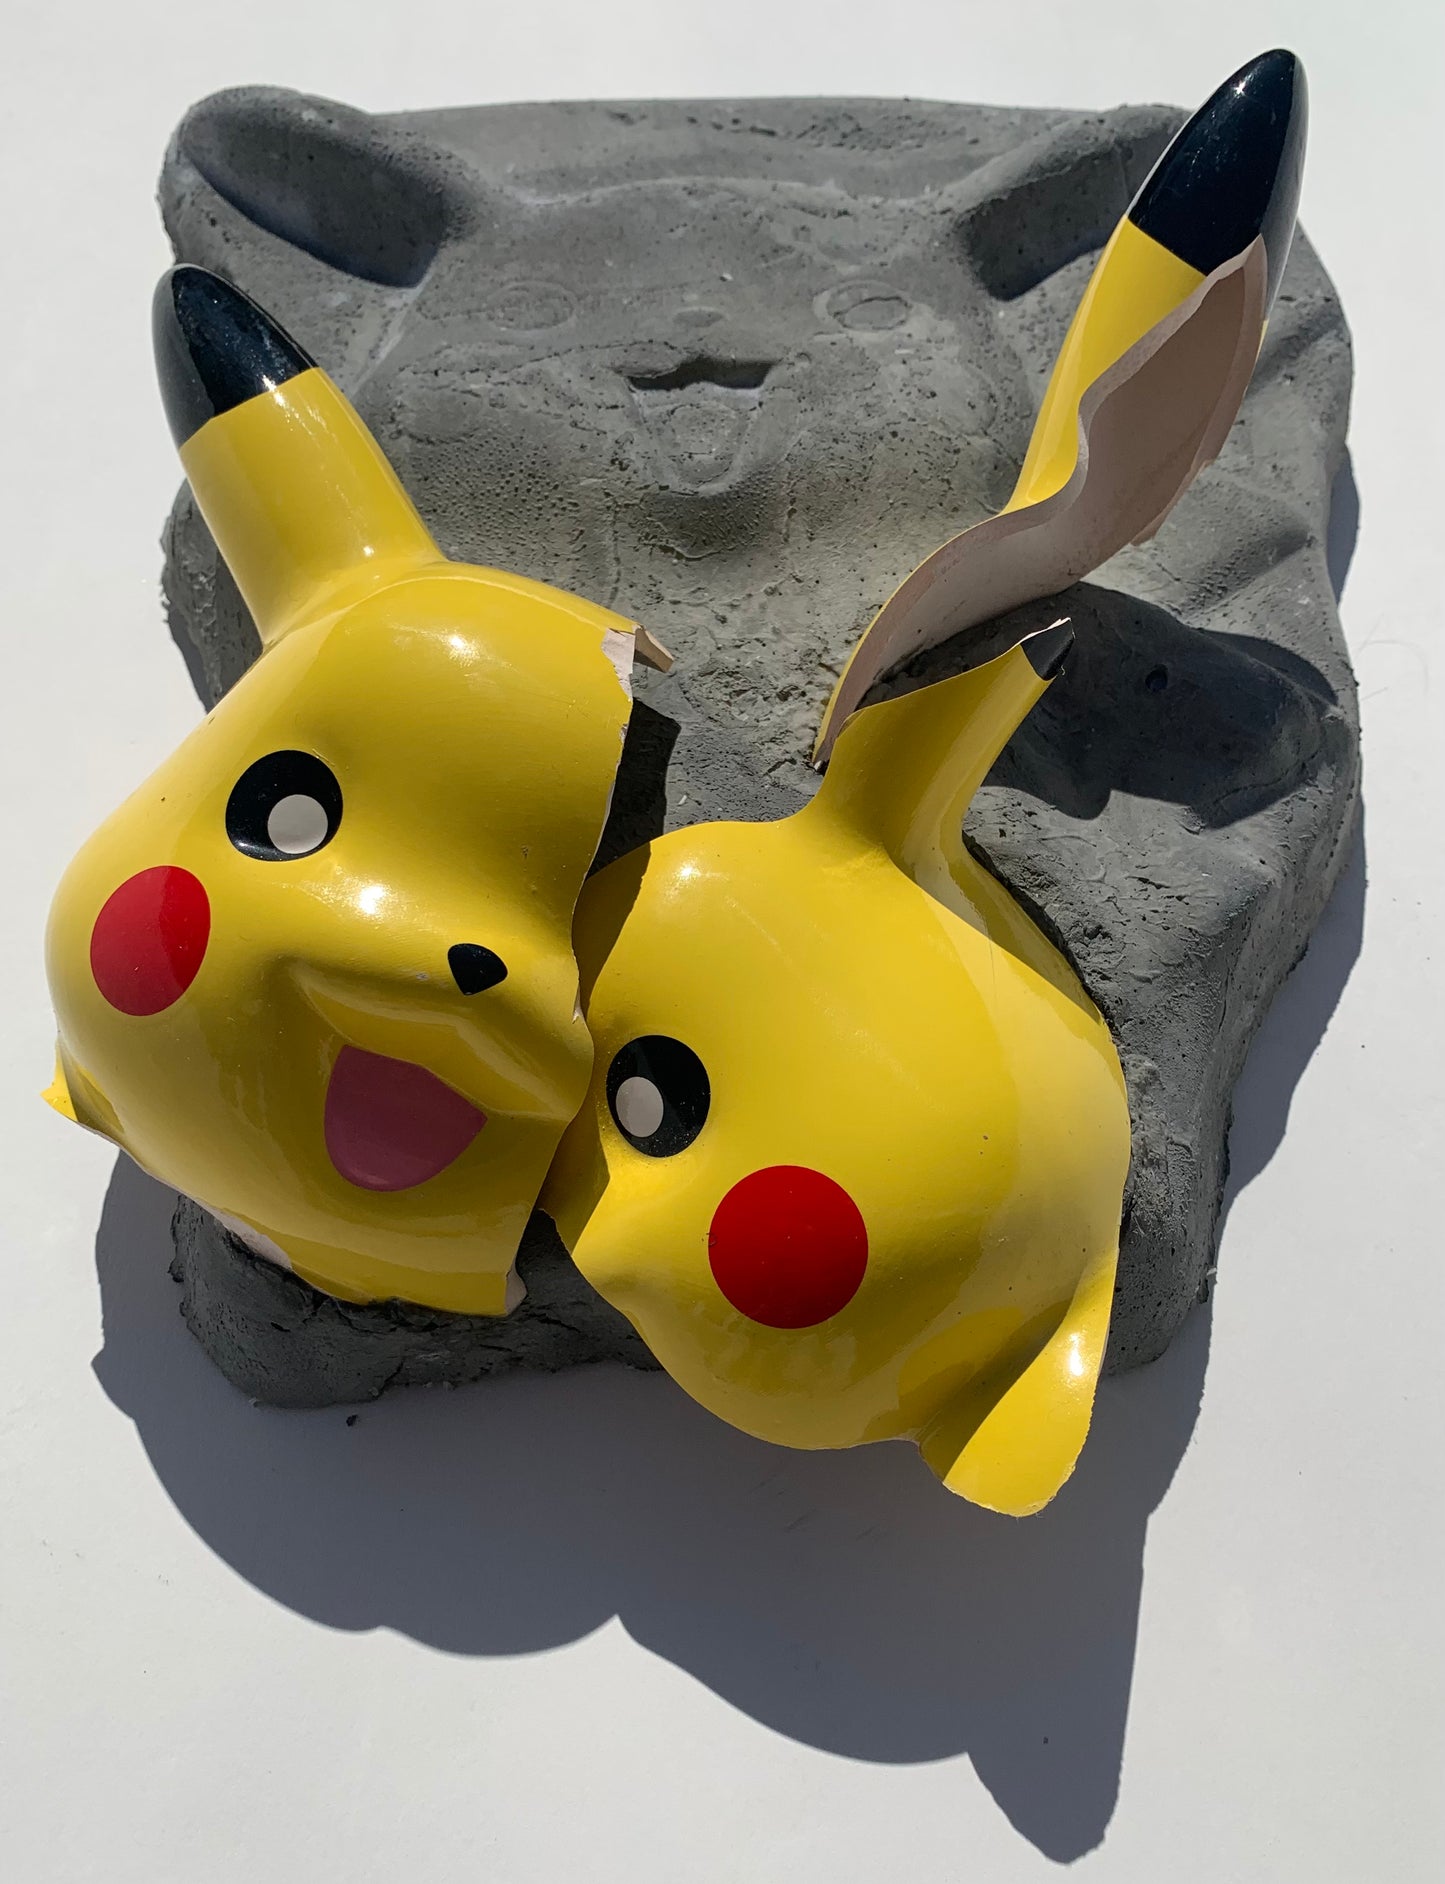 "Armed With Ears": Pikachu on Pikachu Ceramic & Concrete Japanese Invasive Smacker